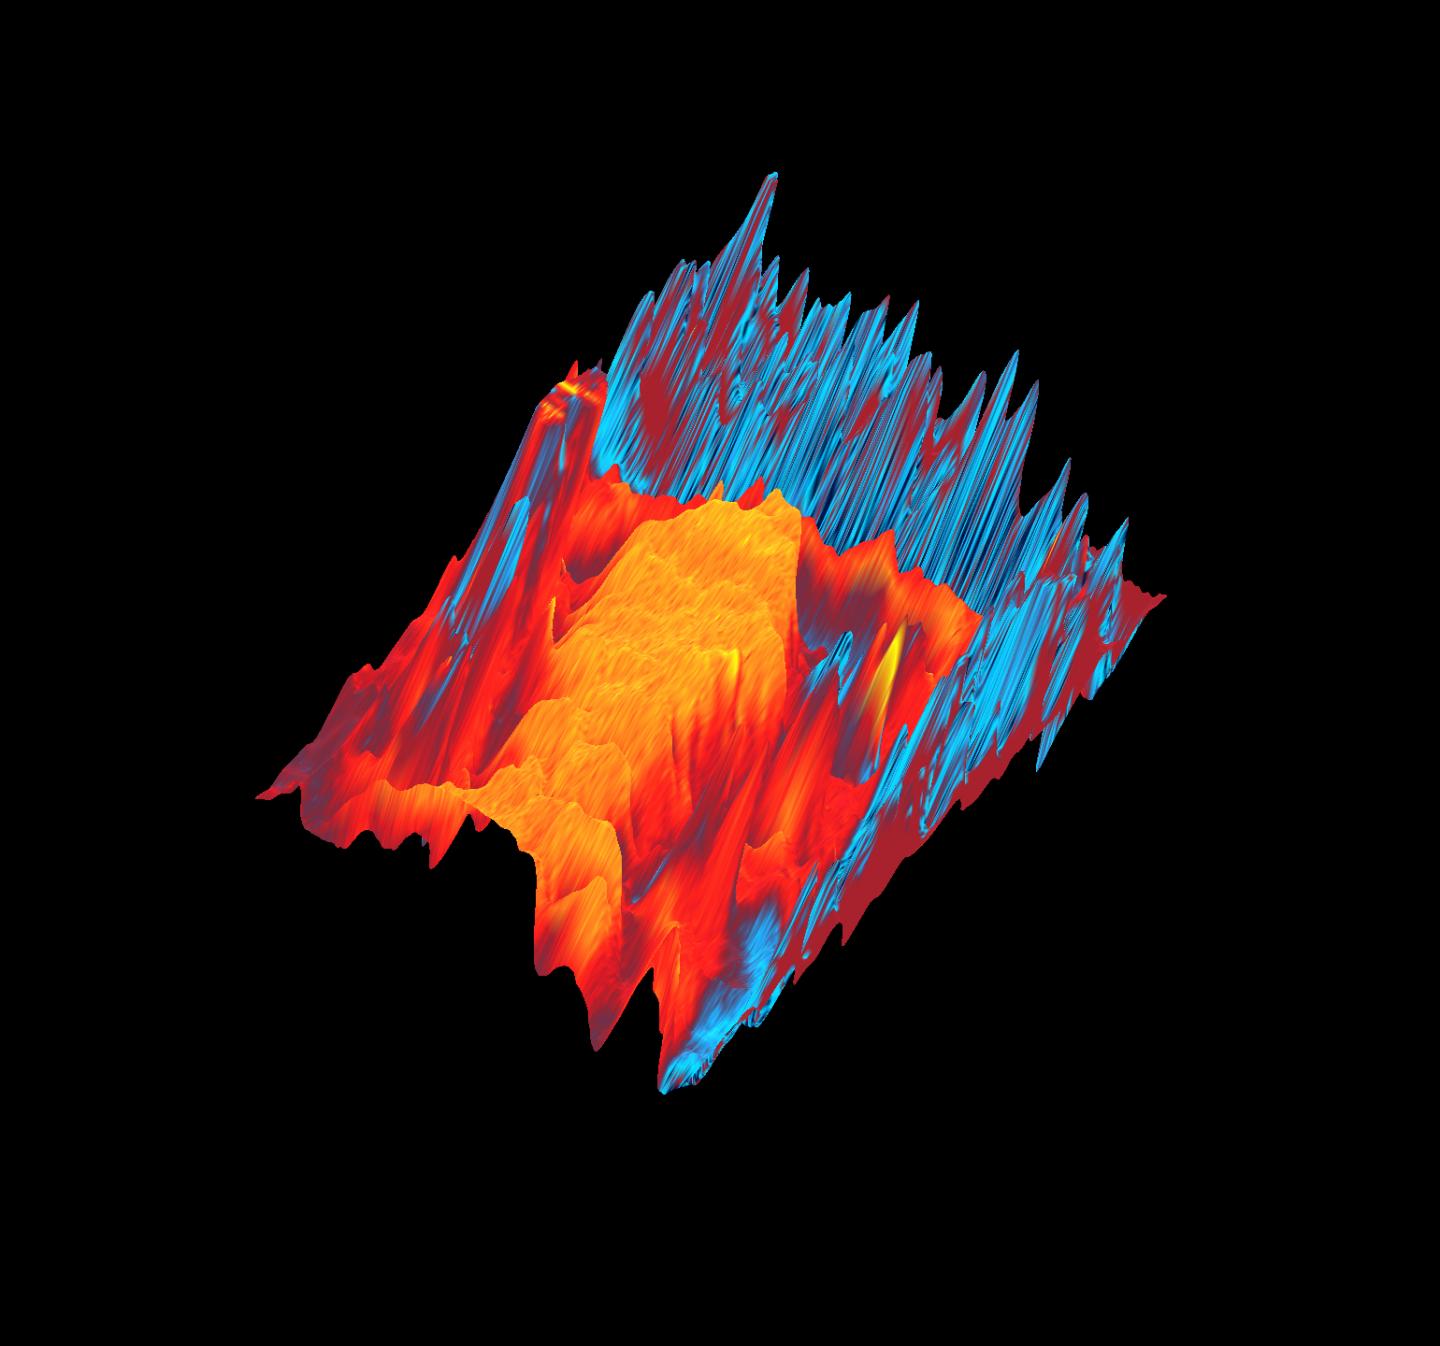 Laser Compositional Image of 3D Crystal